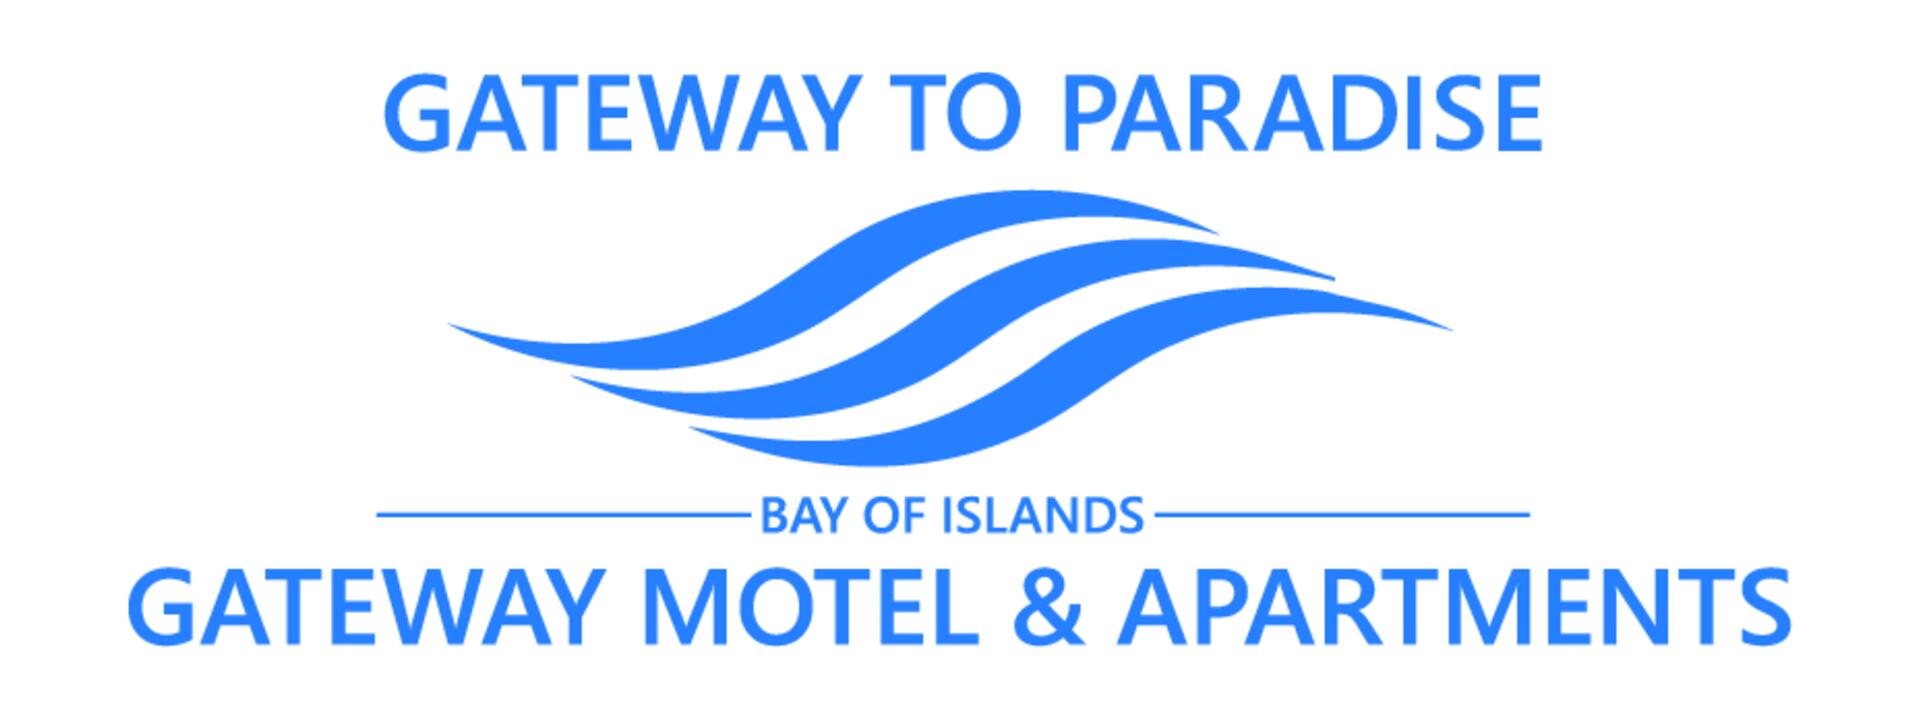 final-bay-of-islands-gateway-motel-_-apartments.jpg